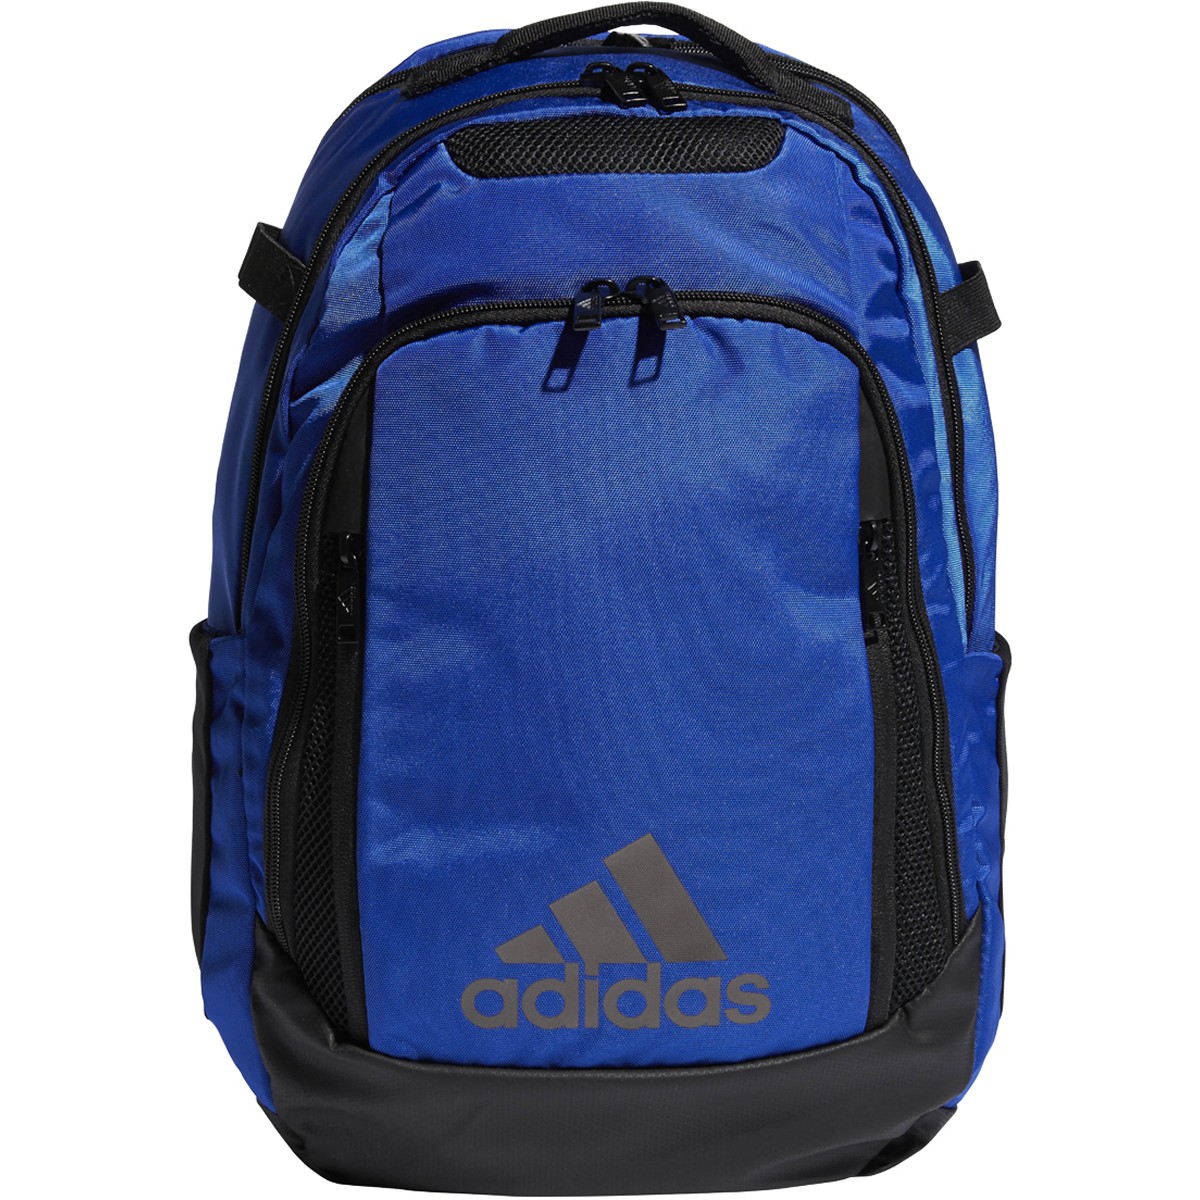 Adidas 5STARBKPCK - 5 Star Team Backpack